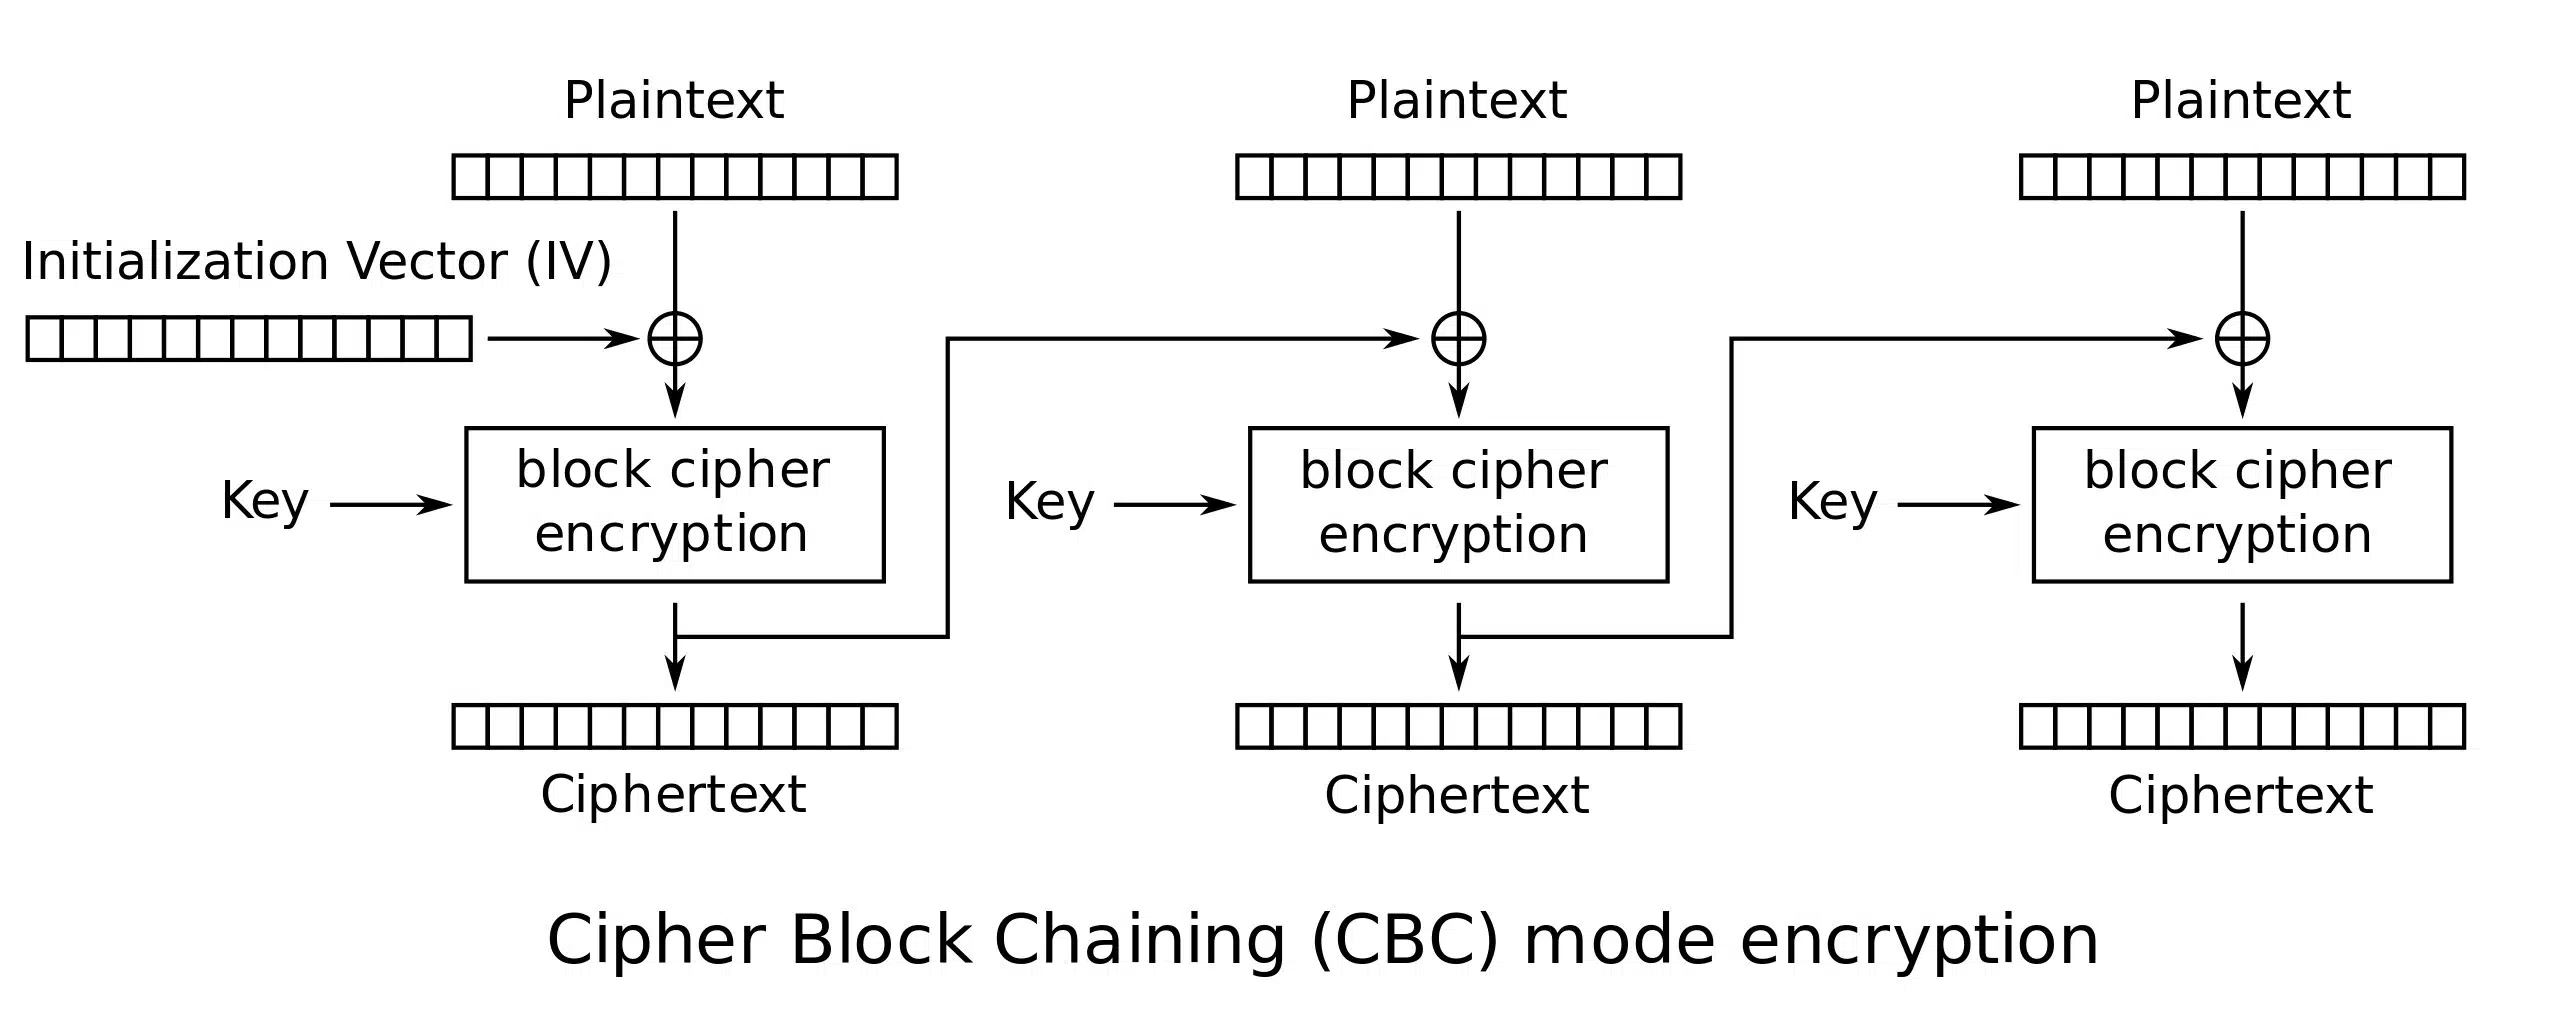 fernet-cbc-mode-encryption